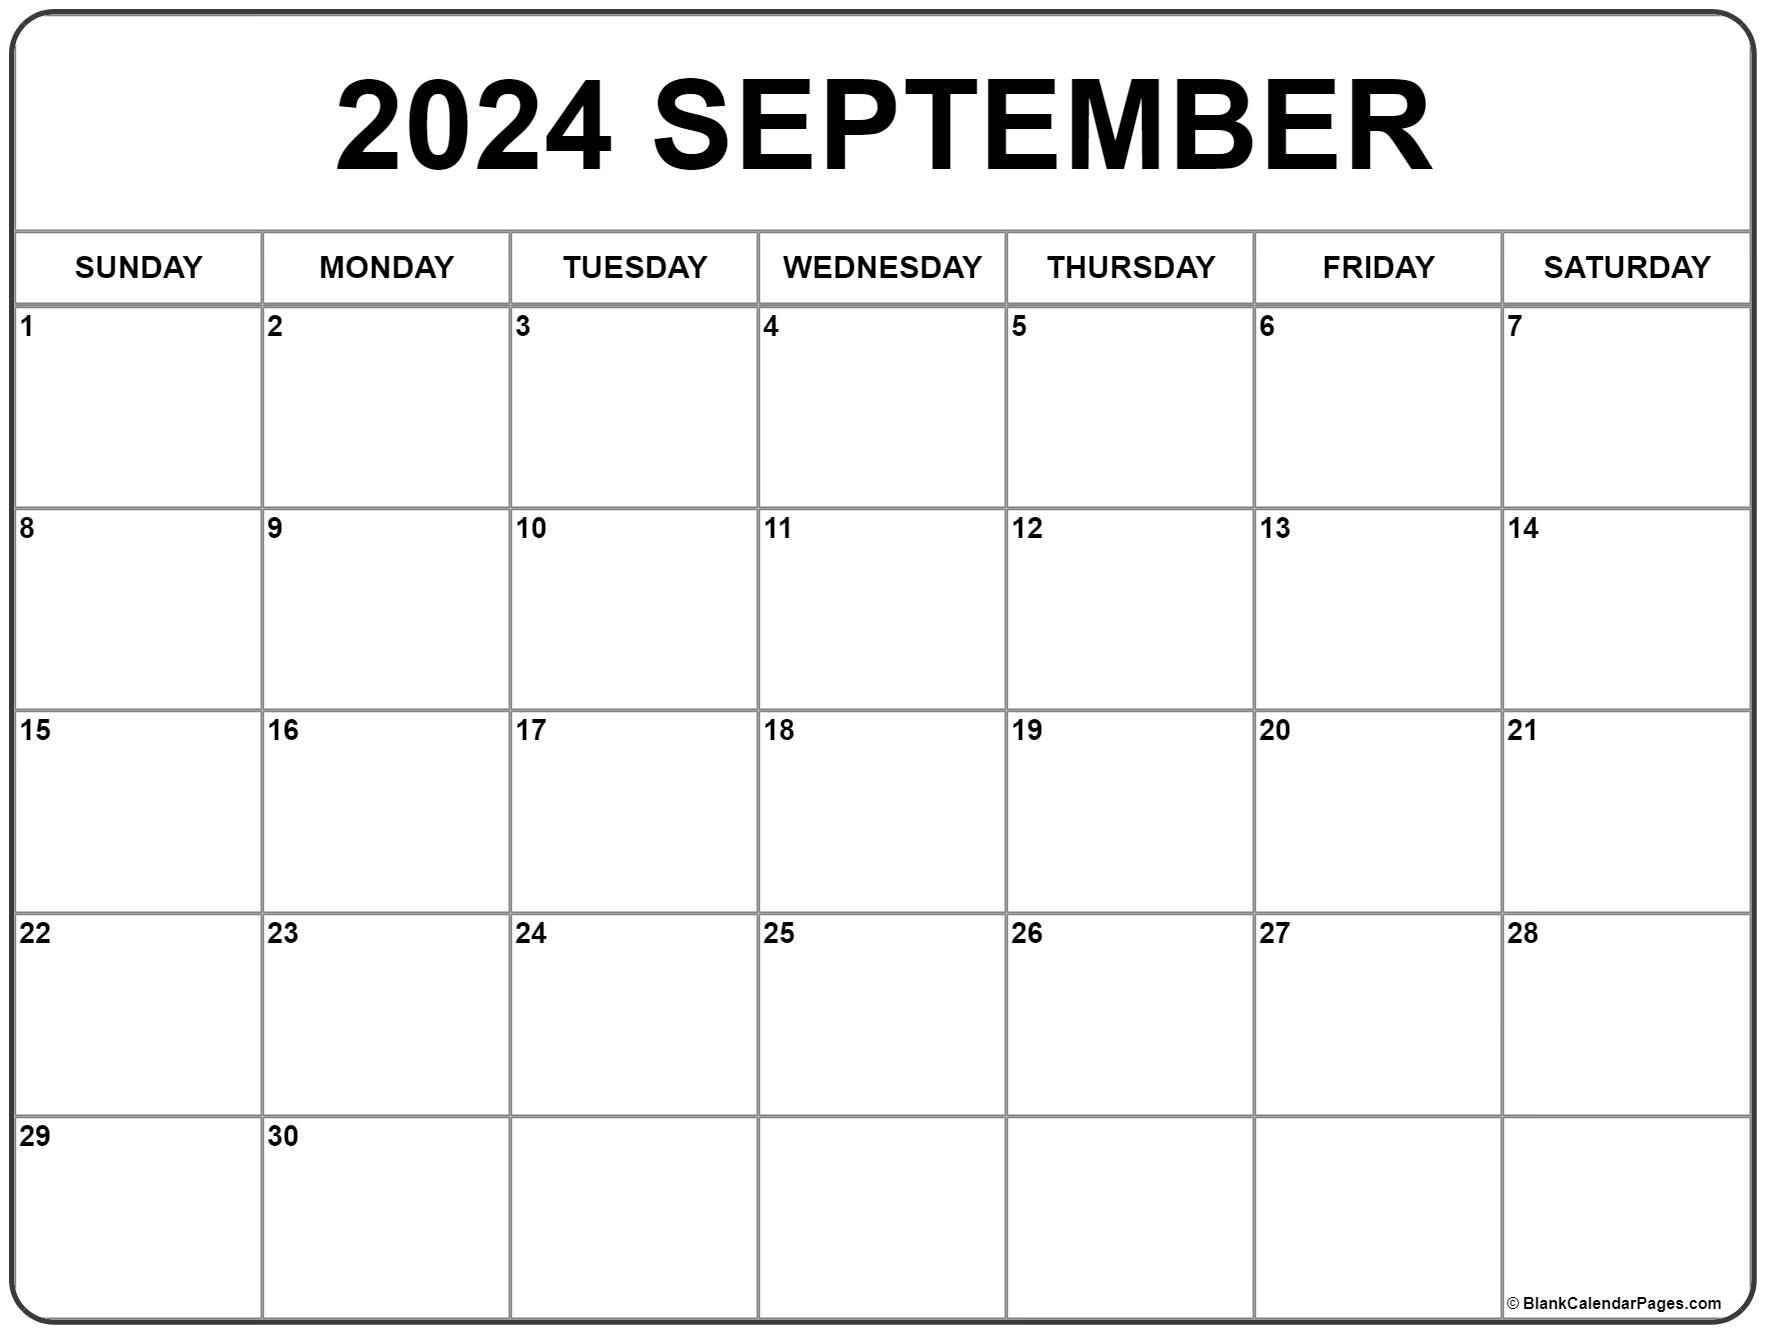 September 2024 Calendar | Free Printable Calendar | Printable Calendar 2024 September